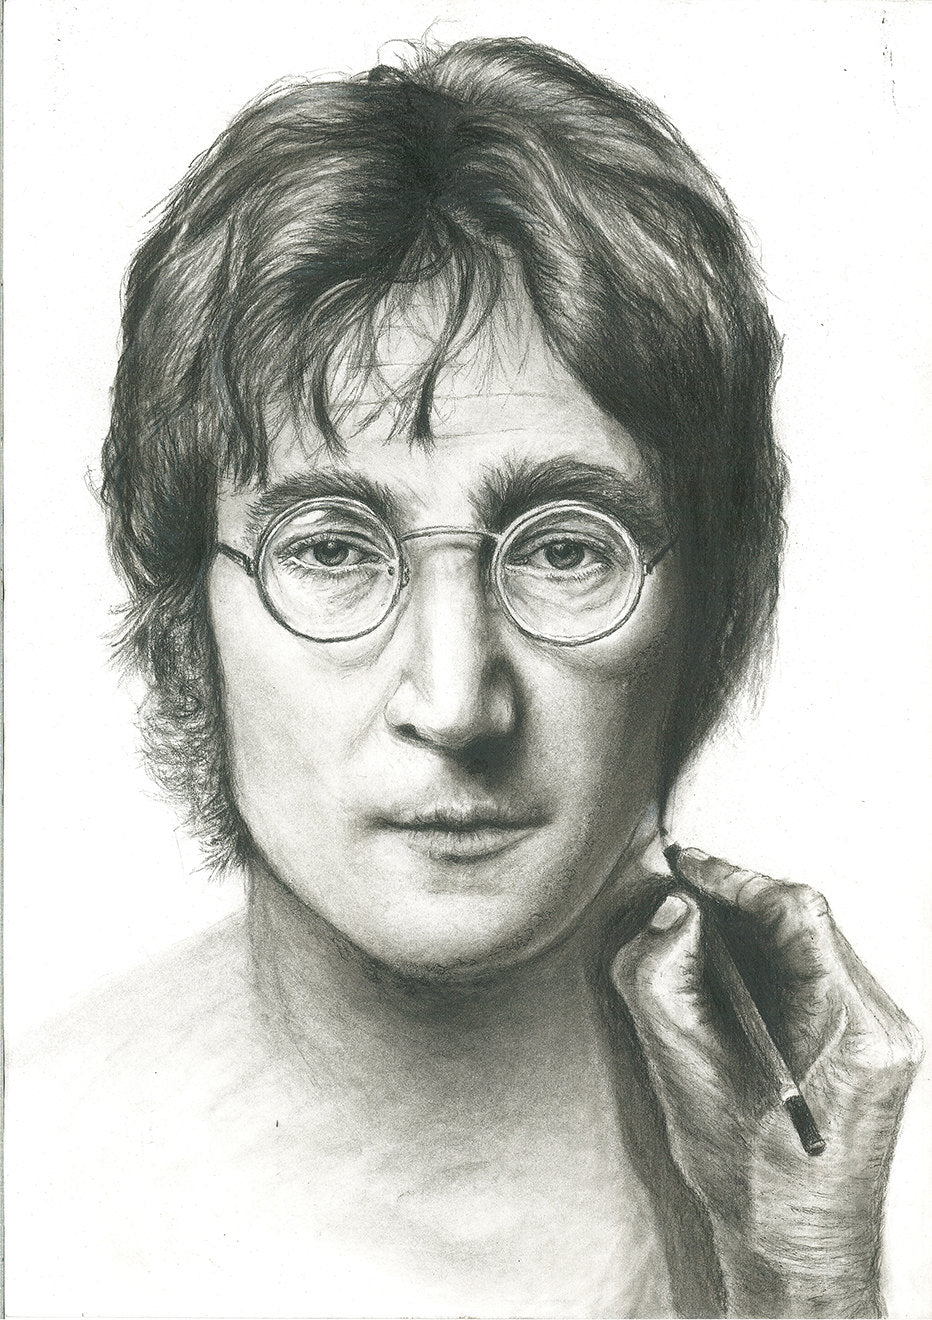 John Lennon Give ART a chance charcoal pencil portrait drawing beatles fan art print poster wall decor